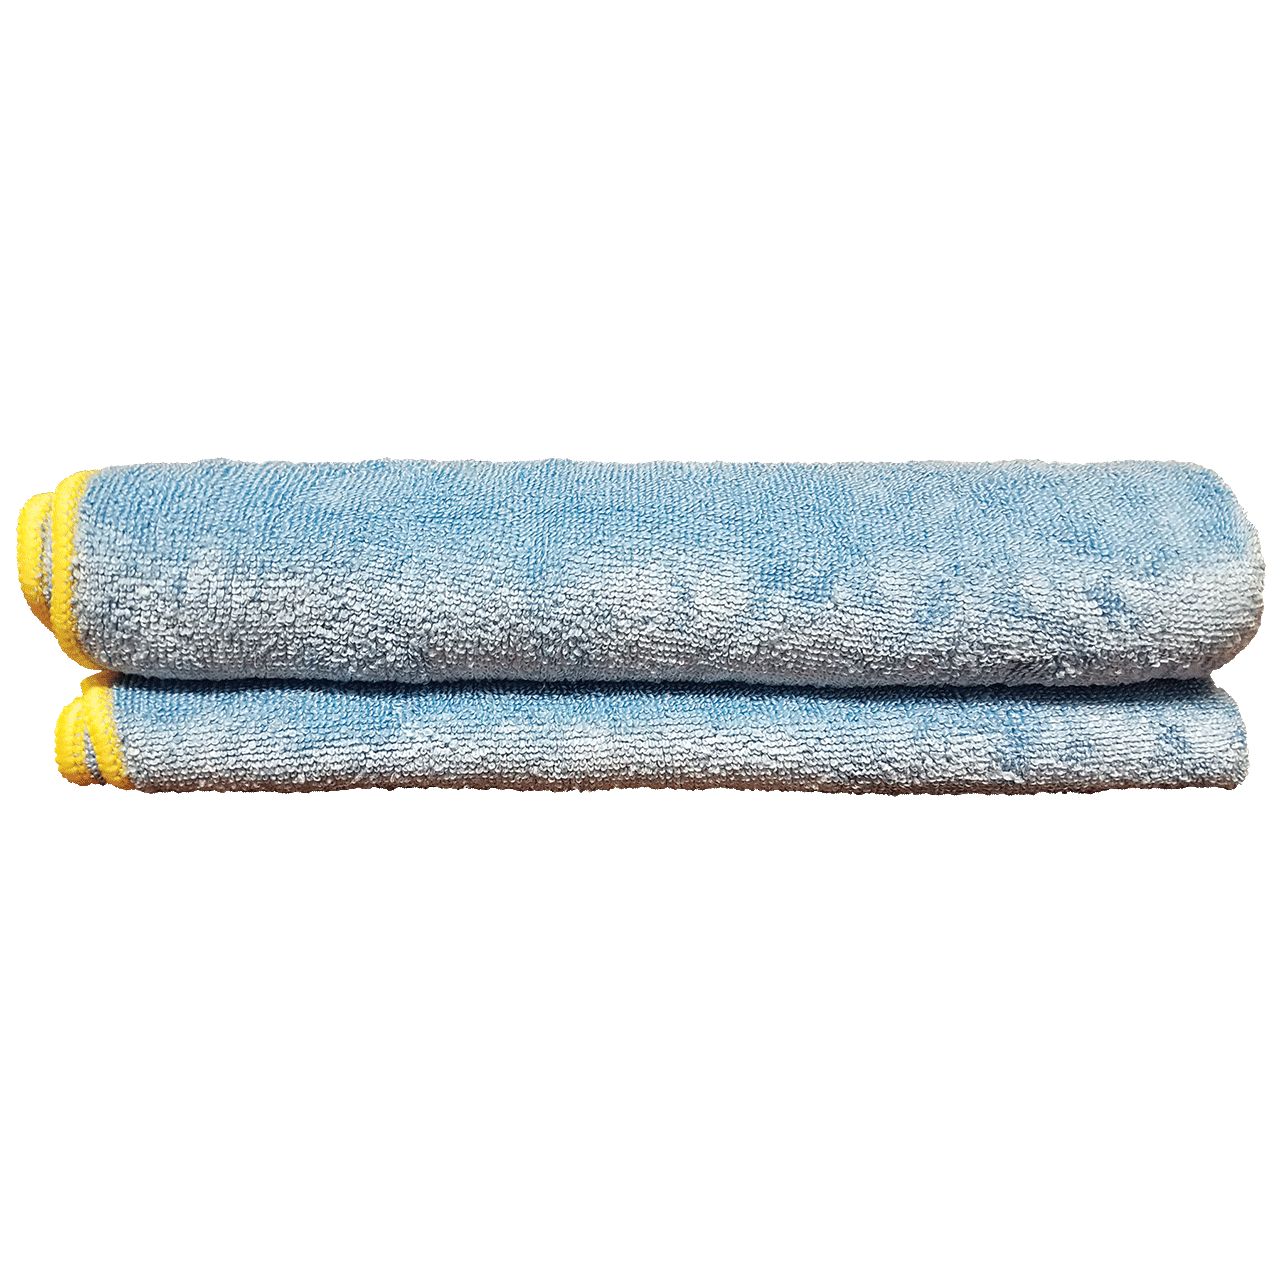 16 X 16 Microfiber Terry Towel, Blue - 12/pack